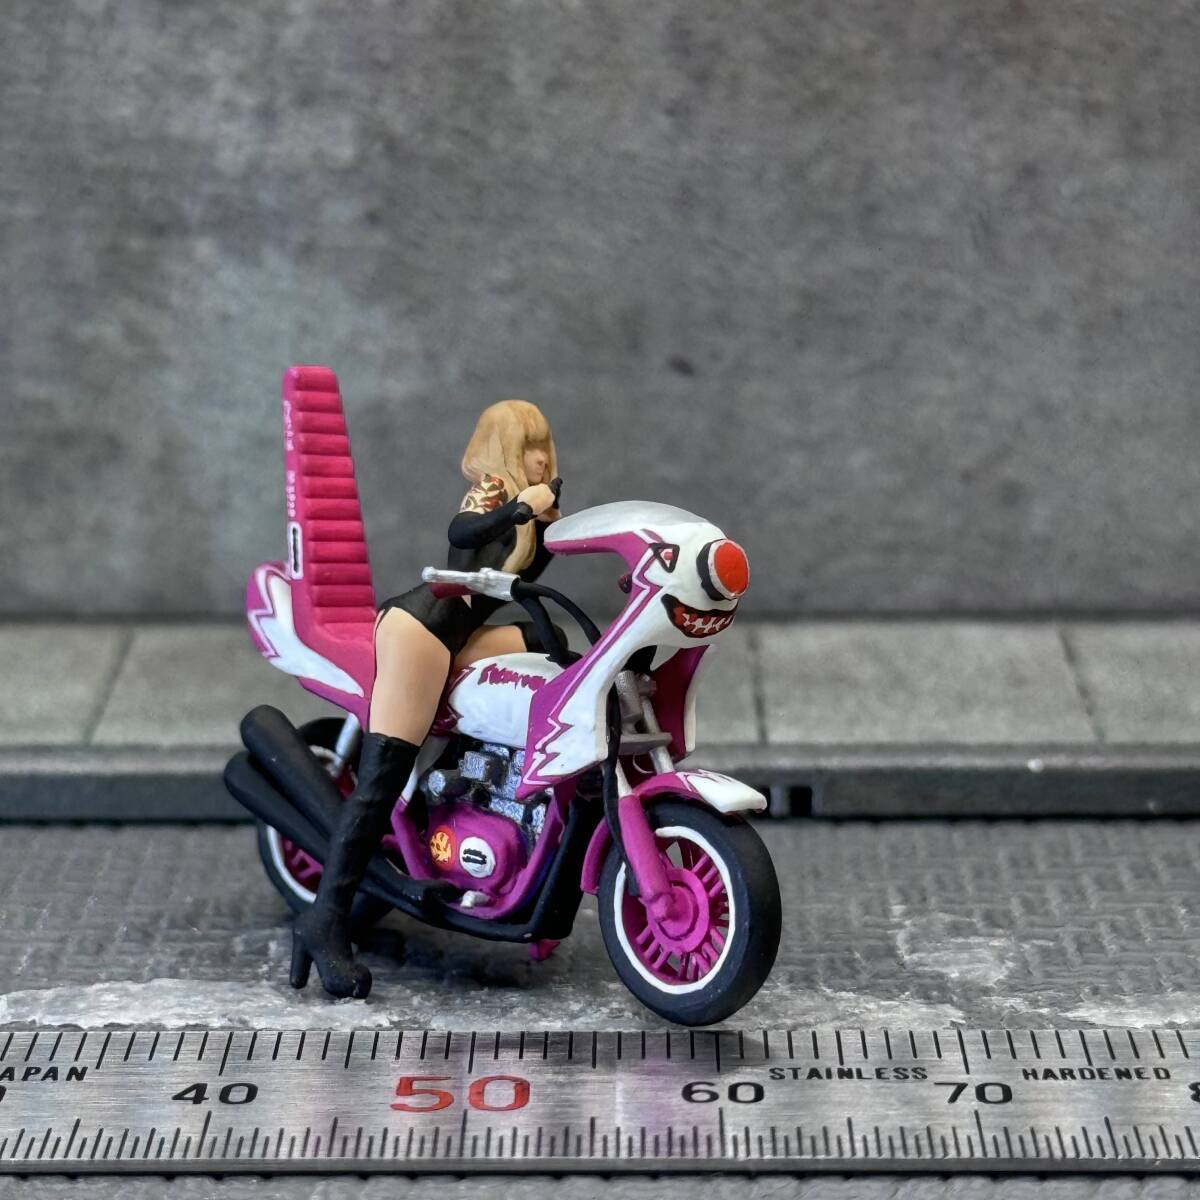 【KS-681】1/64 スケール 暴走族 族車 バイク セット フィギュア ミニチュア ジオラマ ミニカー トミカ_画像2